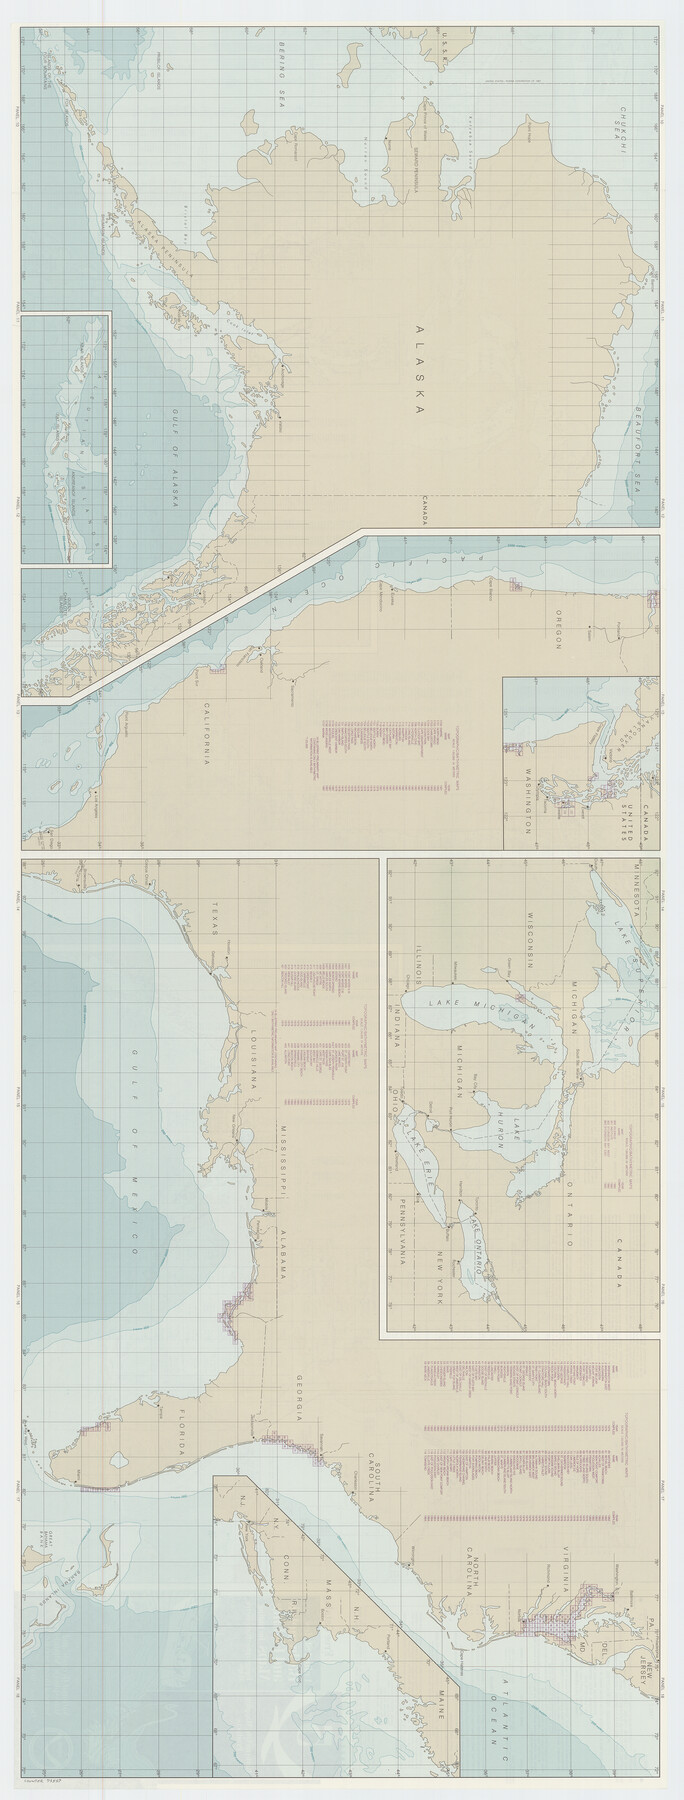 United States Bathymetric and Fishing Maps including  Topographic/Bathymetric Maps, 73557, United States Bathymetric and Fishing  Maps including Topographic/Bathymetric Maps, General Map Collection